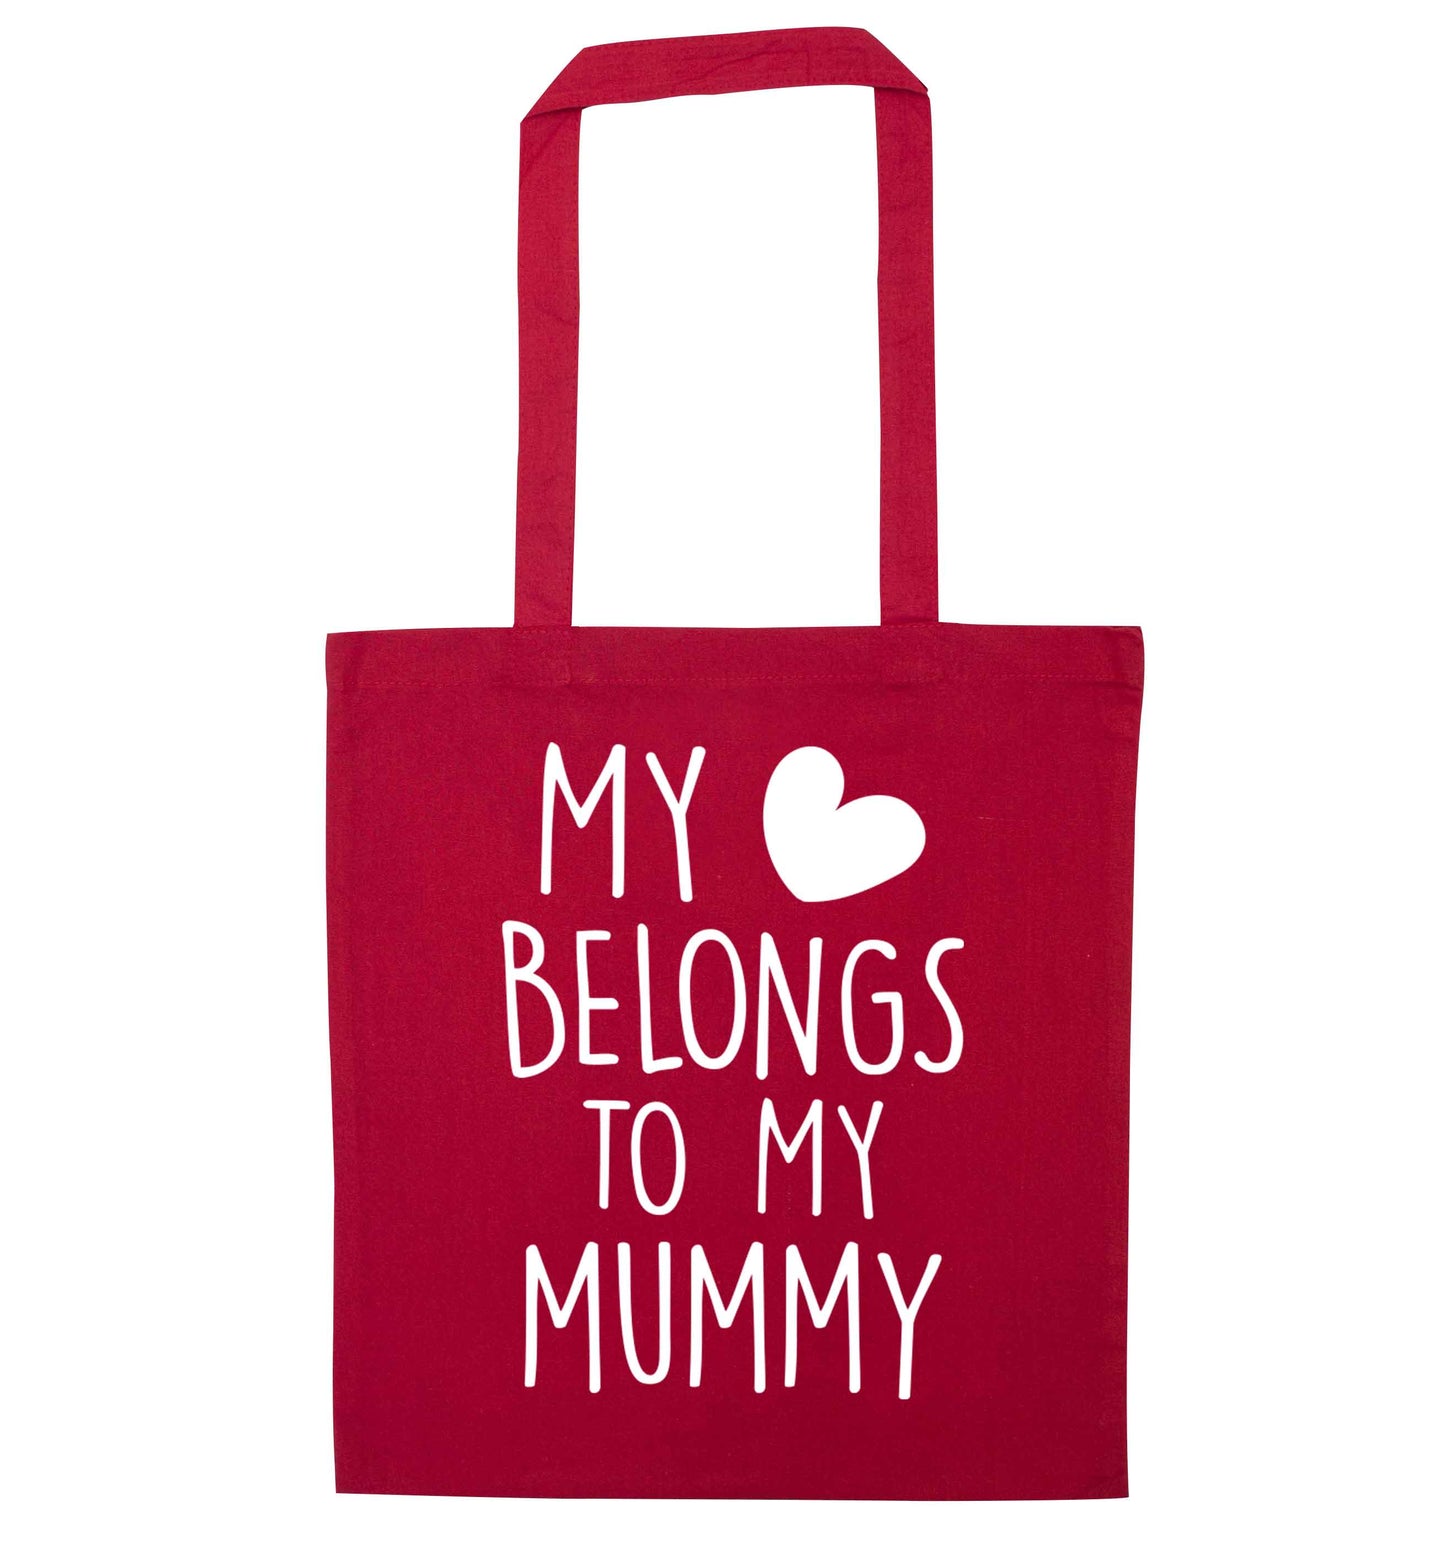 My heart belongs to my mummy red tote bag